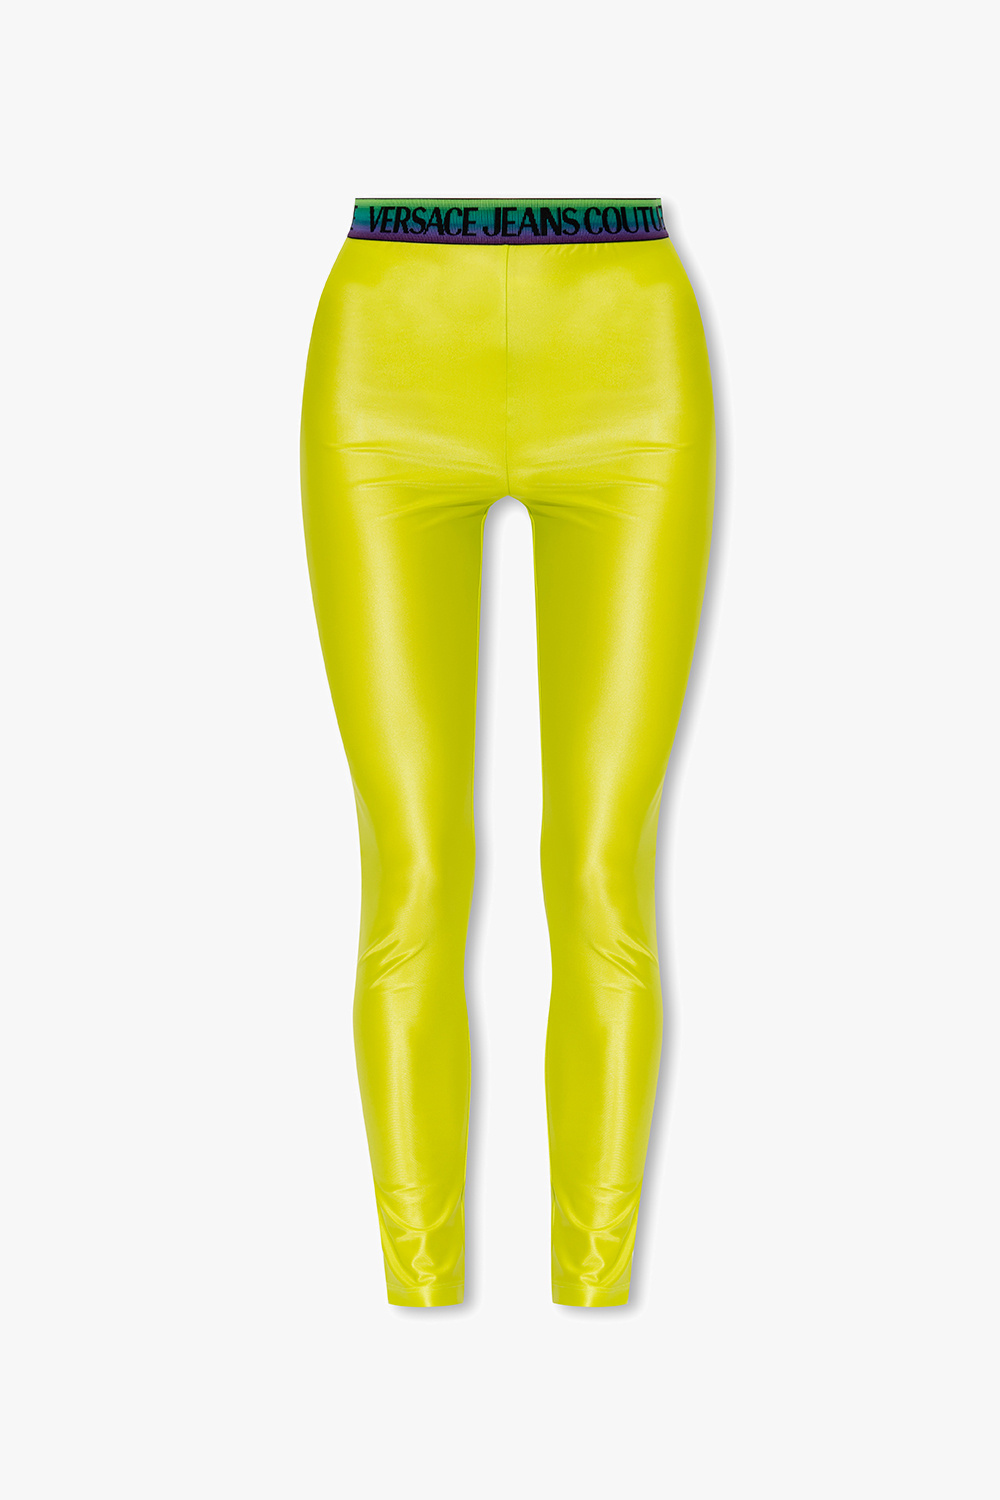 Neon High - GenesinlifeShops Germany - Waist 7 8 Pocket Leggings Versace  Jeans Couture - High-Waist 7 8 Pocket Leggings